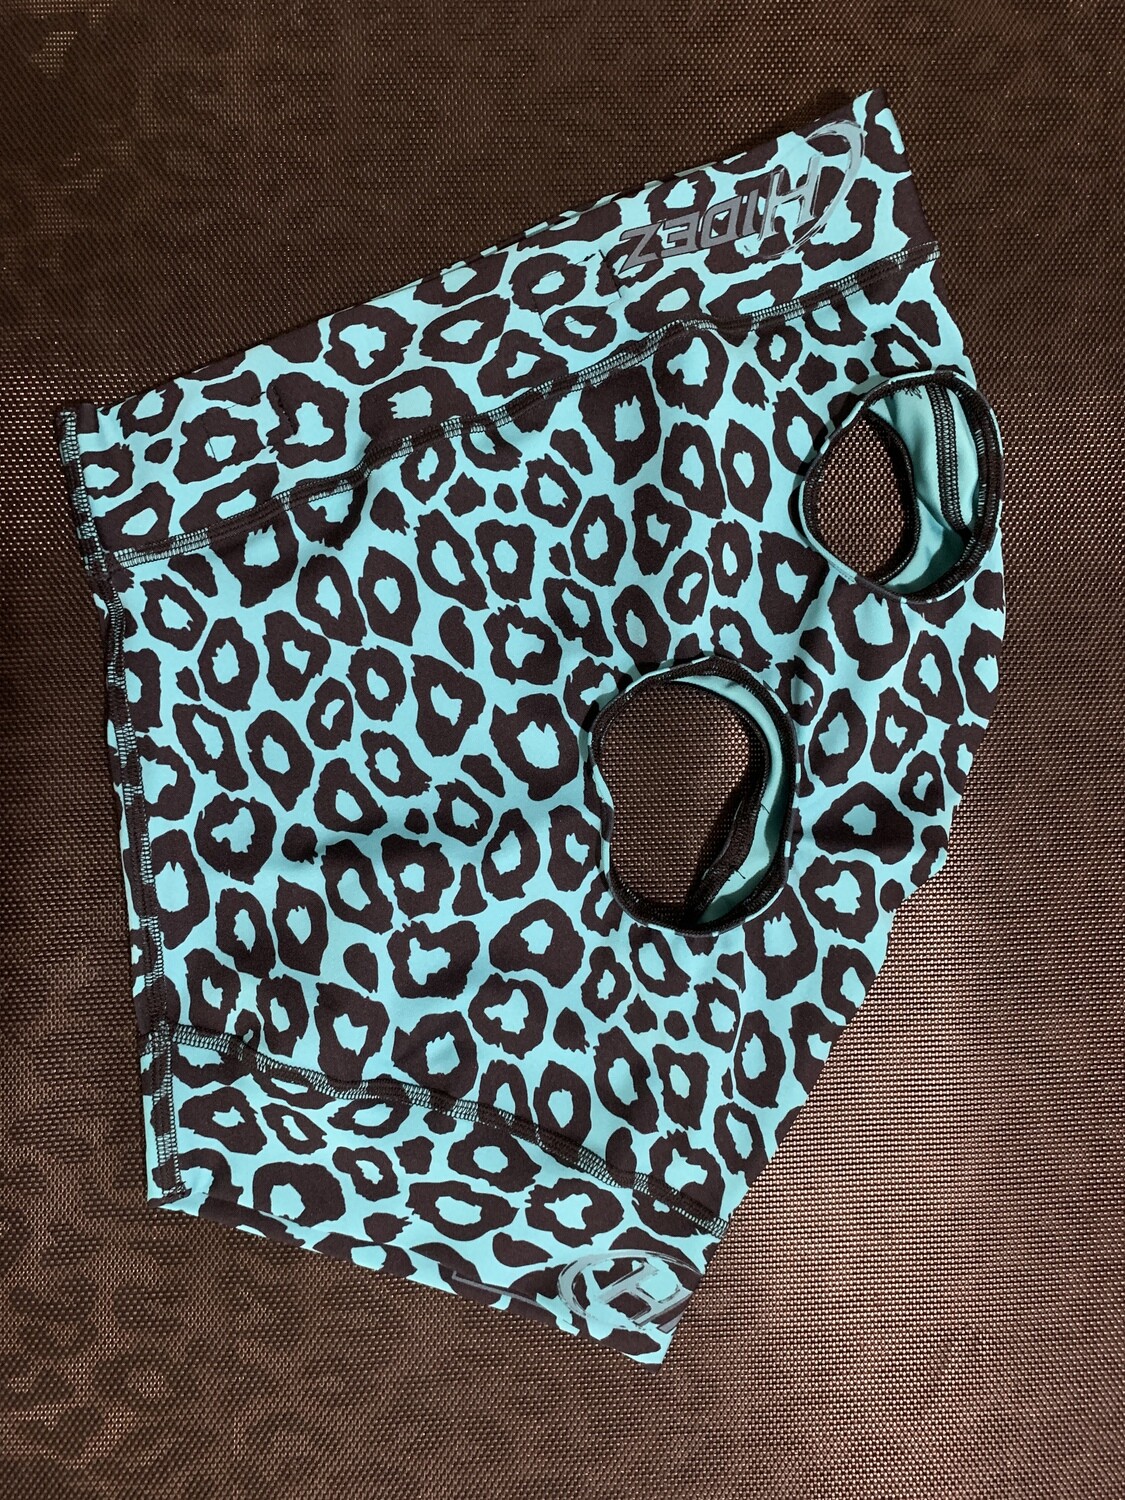 Hidez Printed Mask - medium - in-stock “turquoise cheetah” print